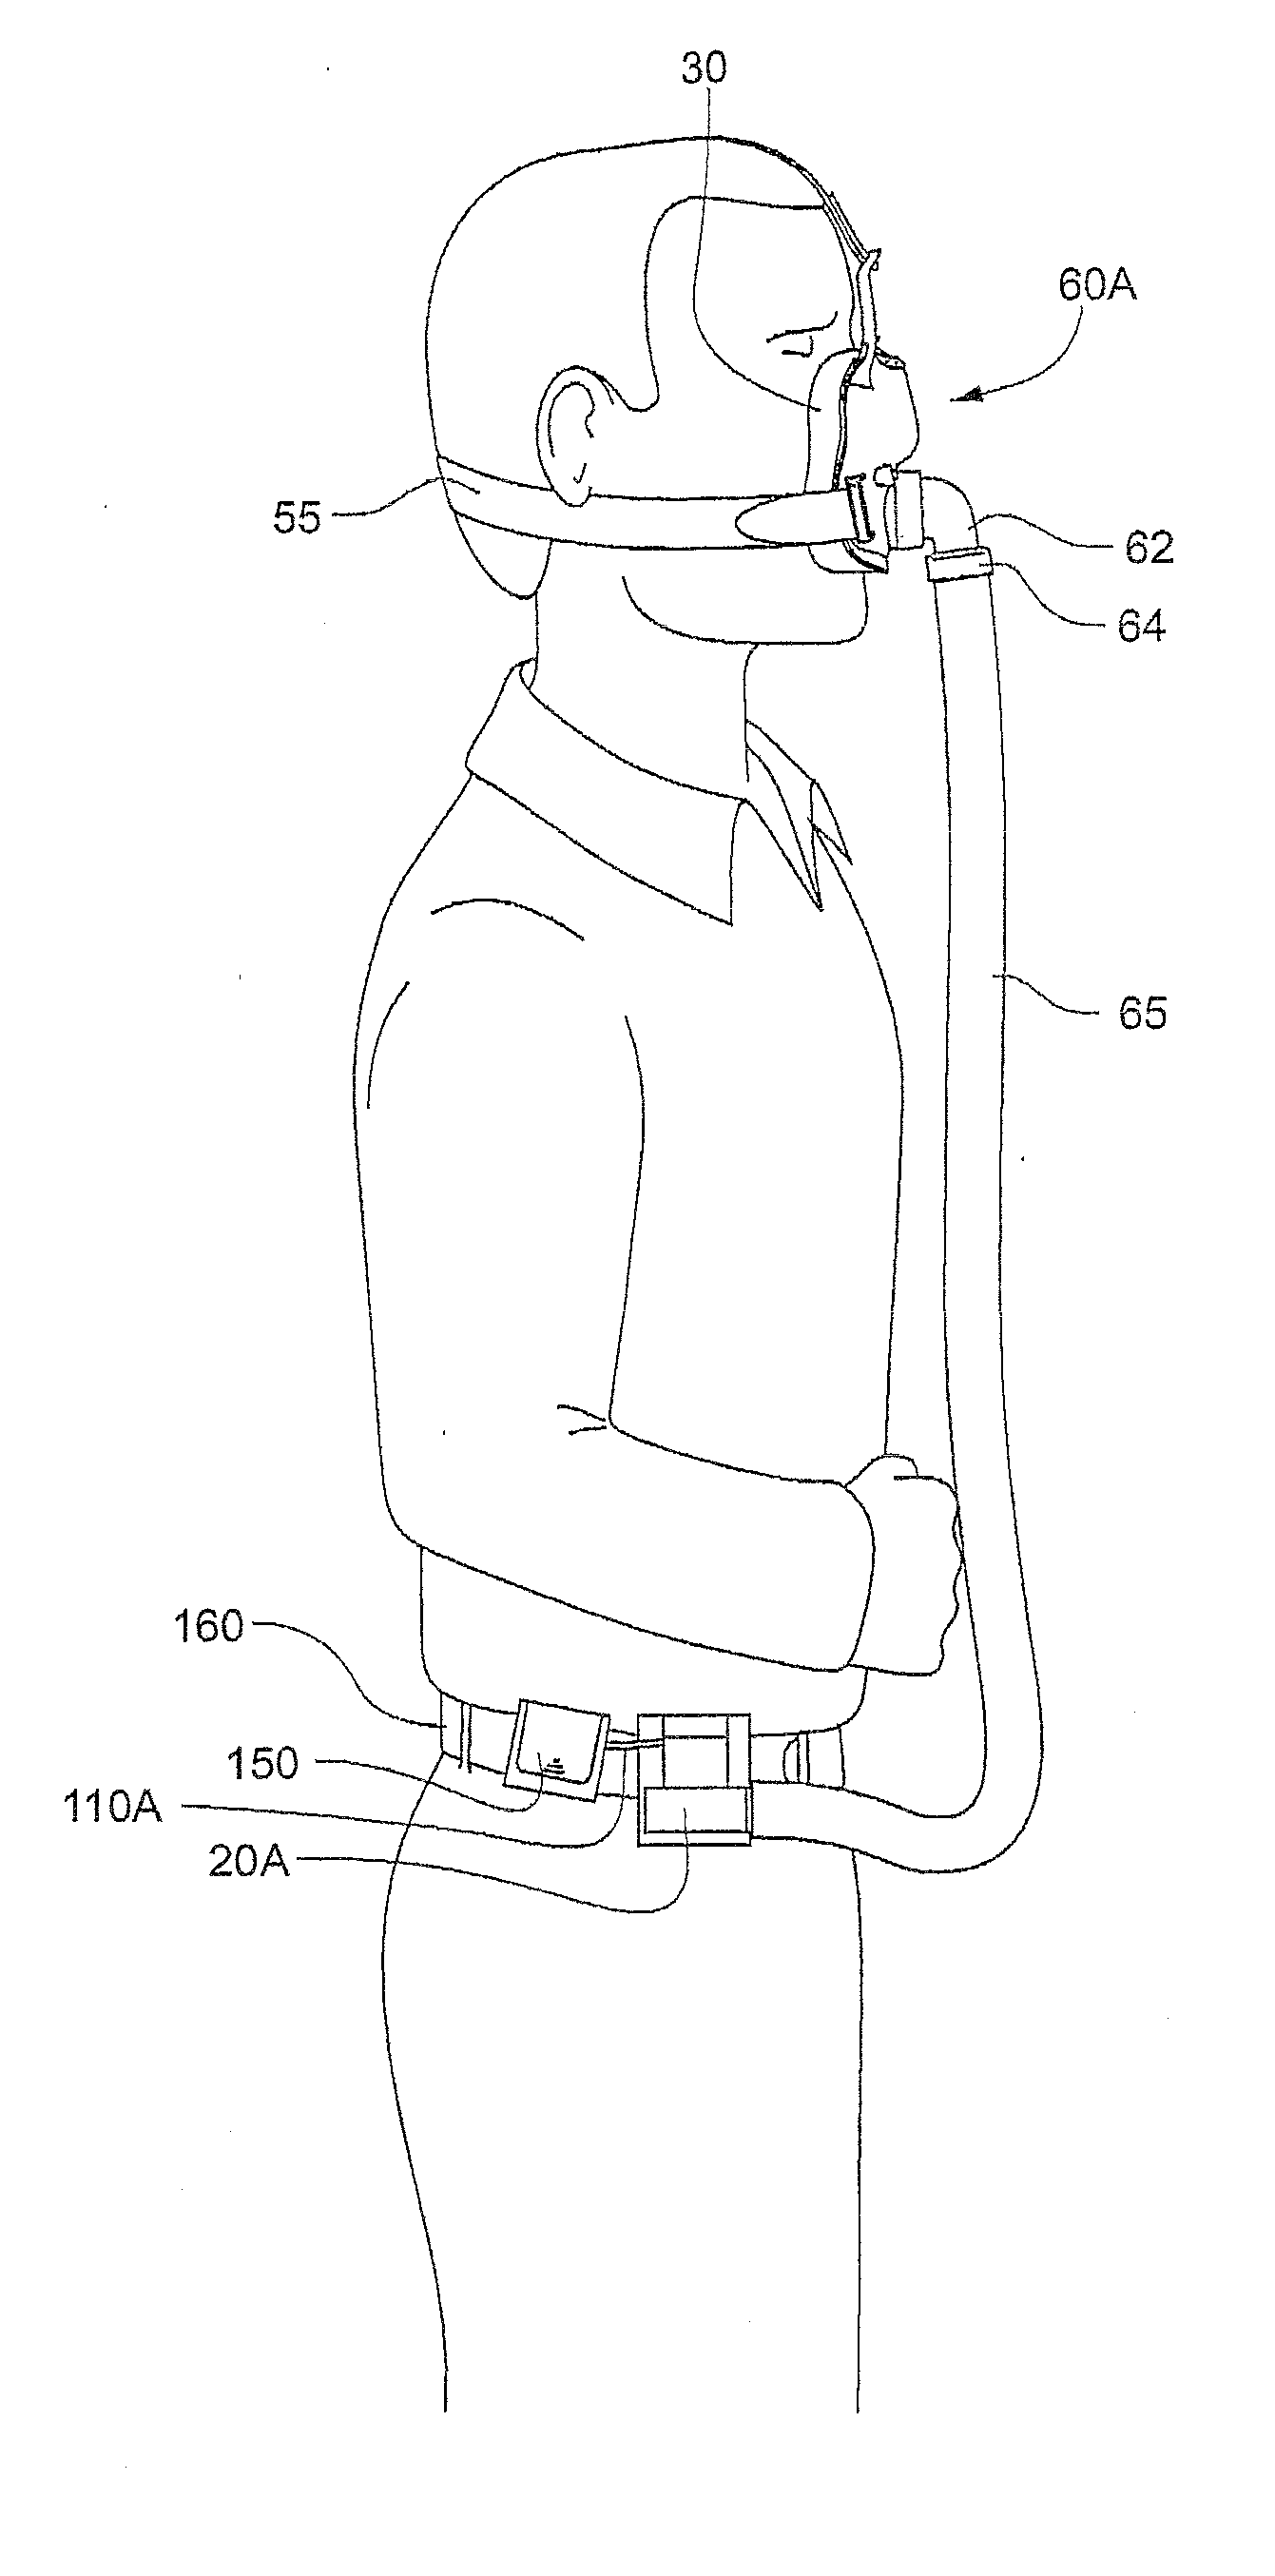 Ventilator mask and system